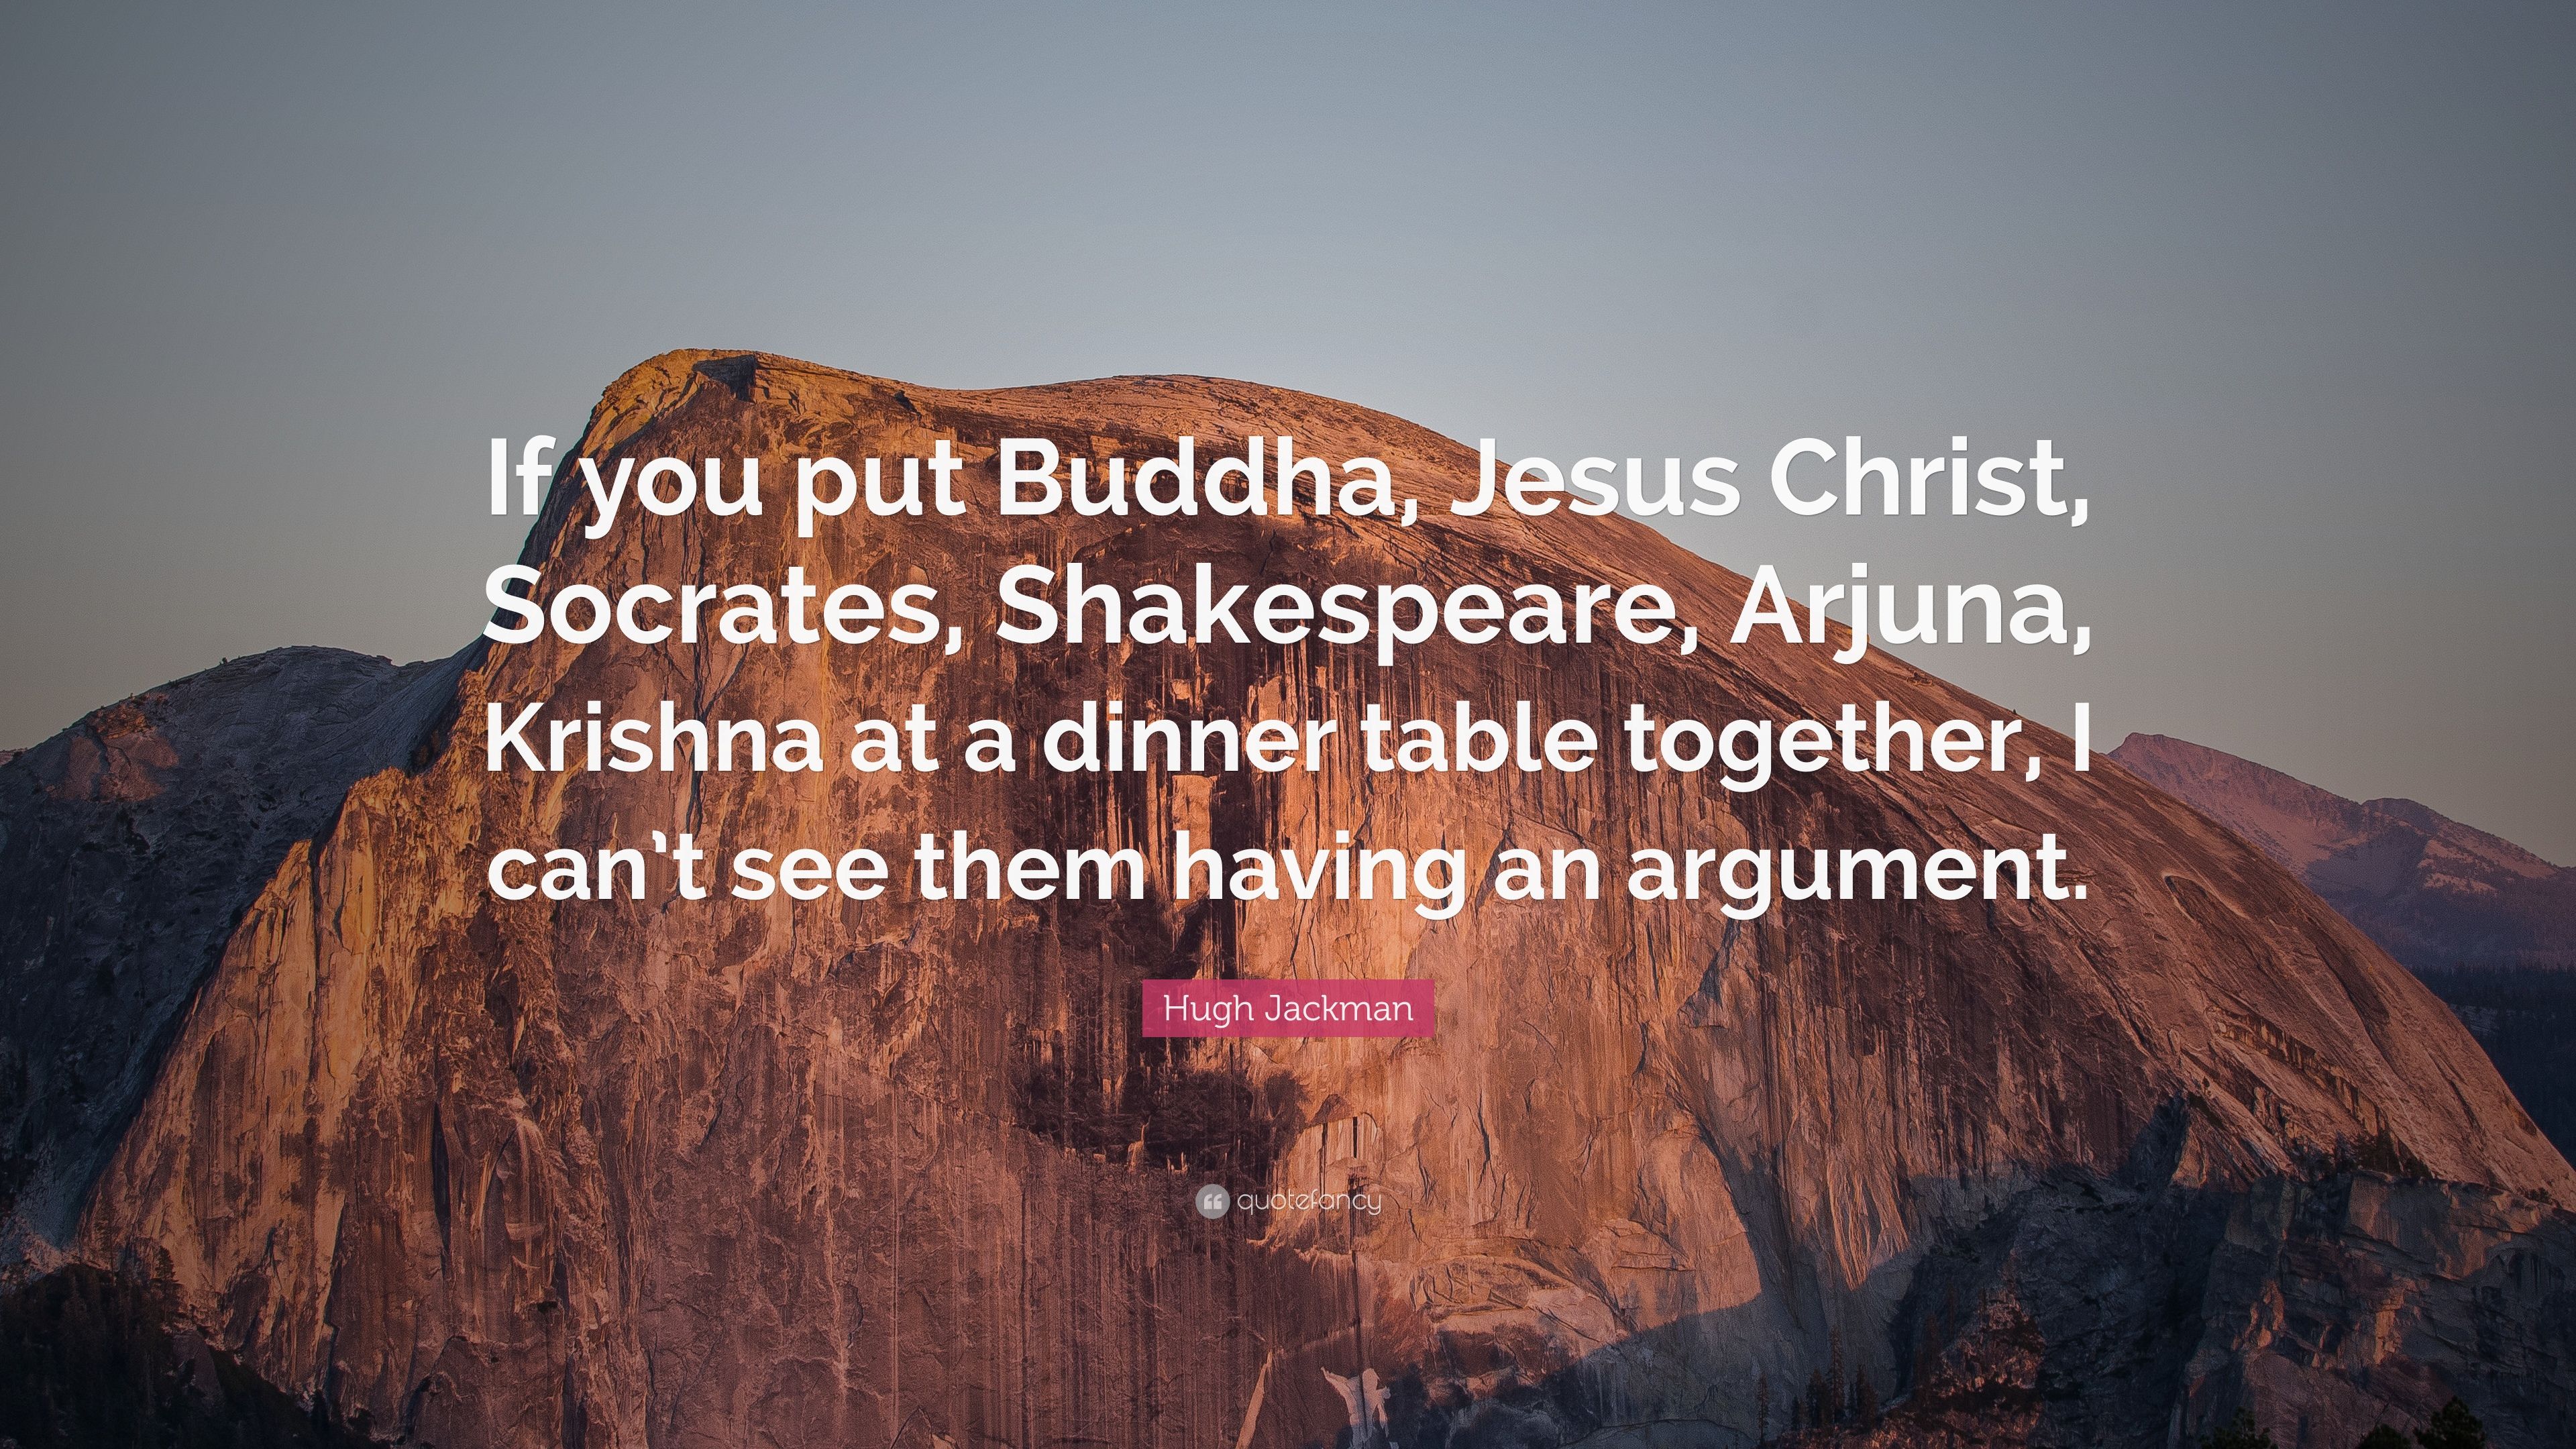 Hugh Jackman Quote: “If you put Buddha, Jesus Christ, Socrates